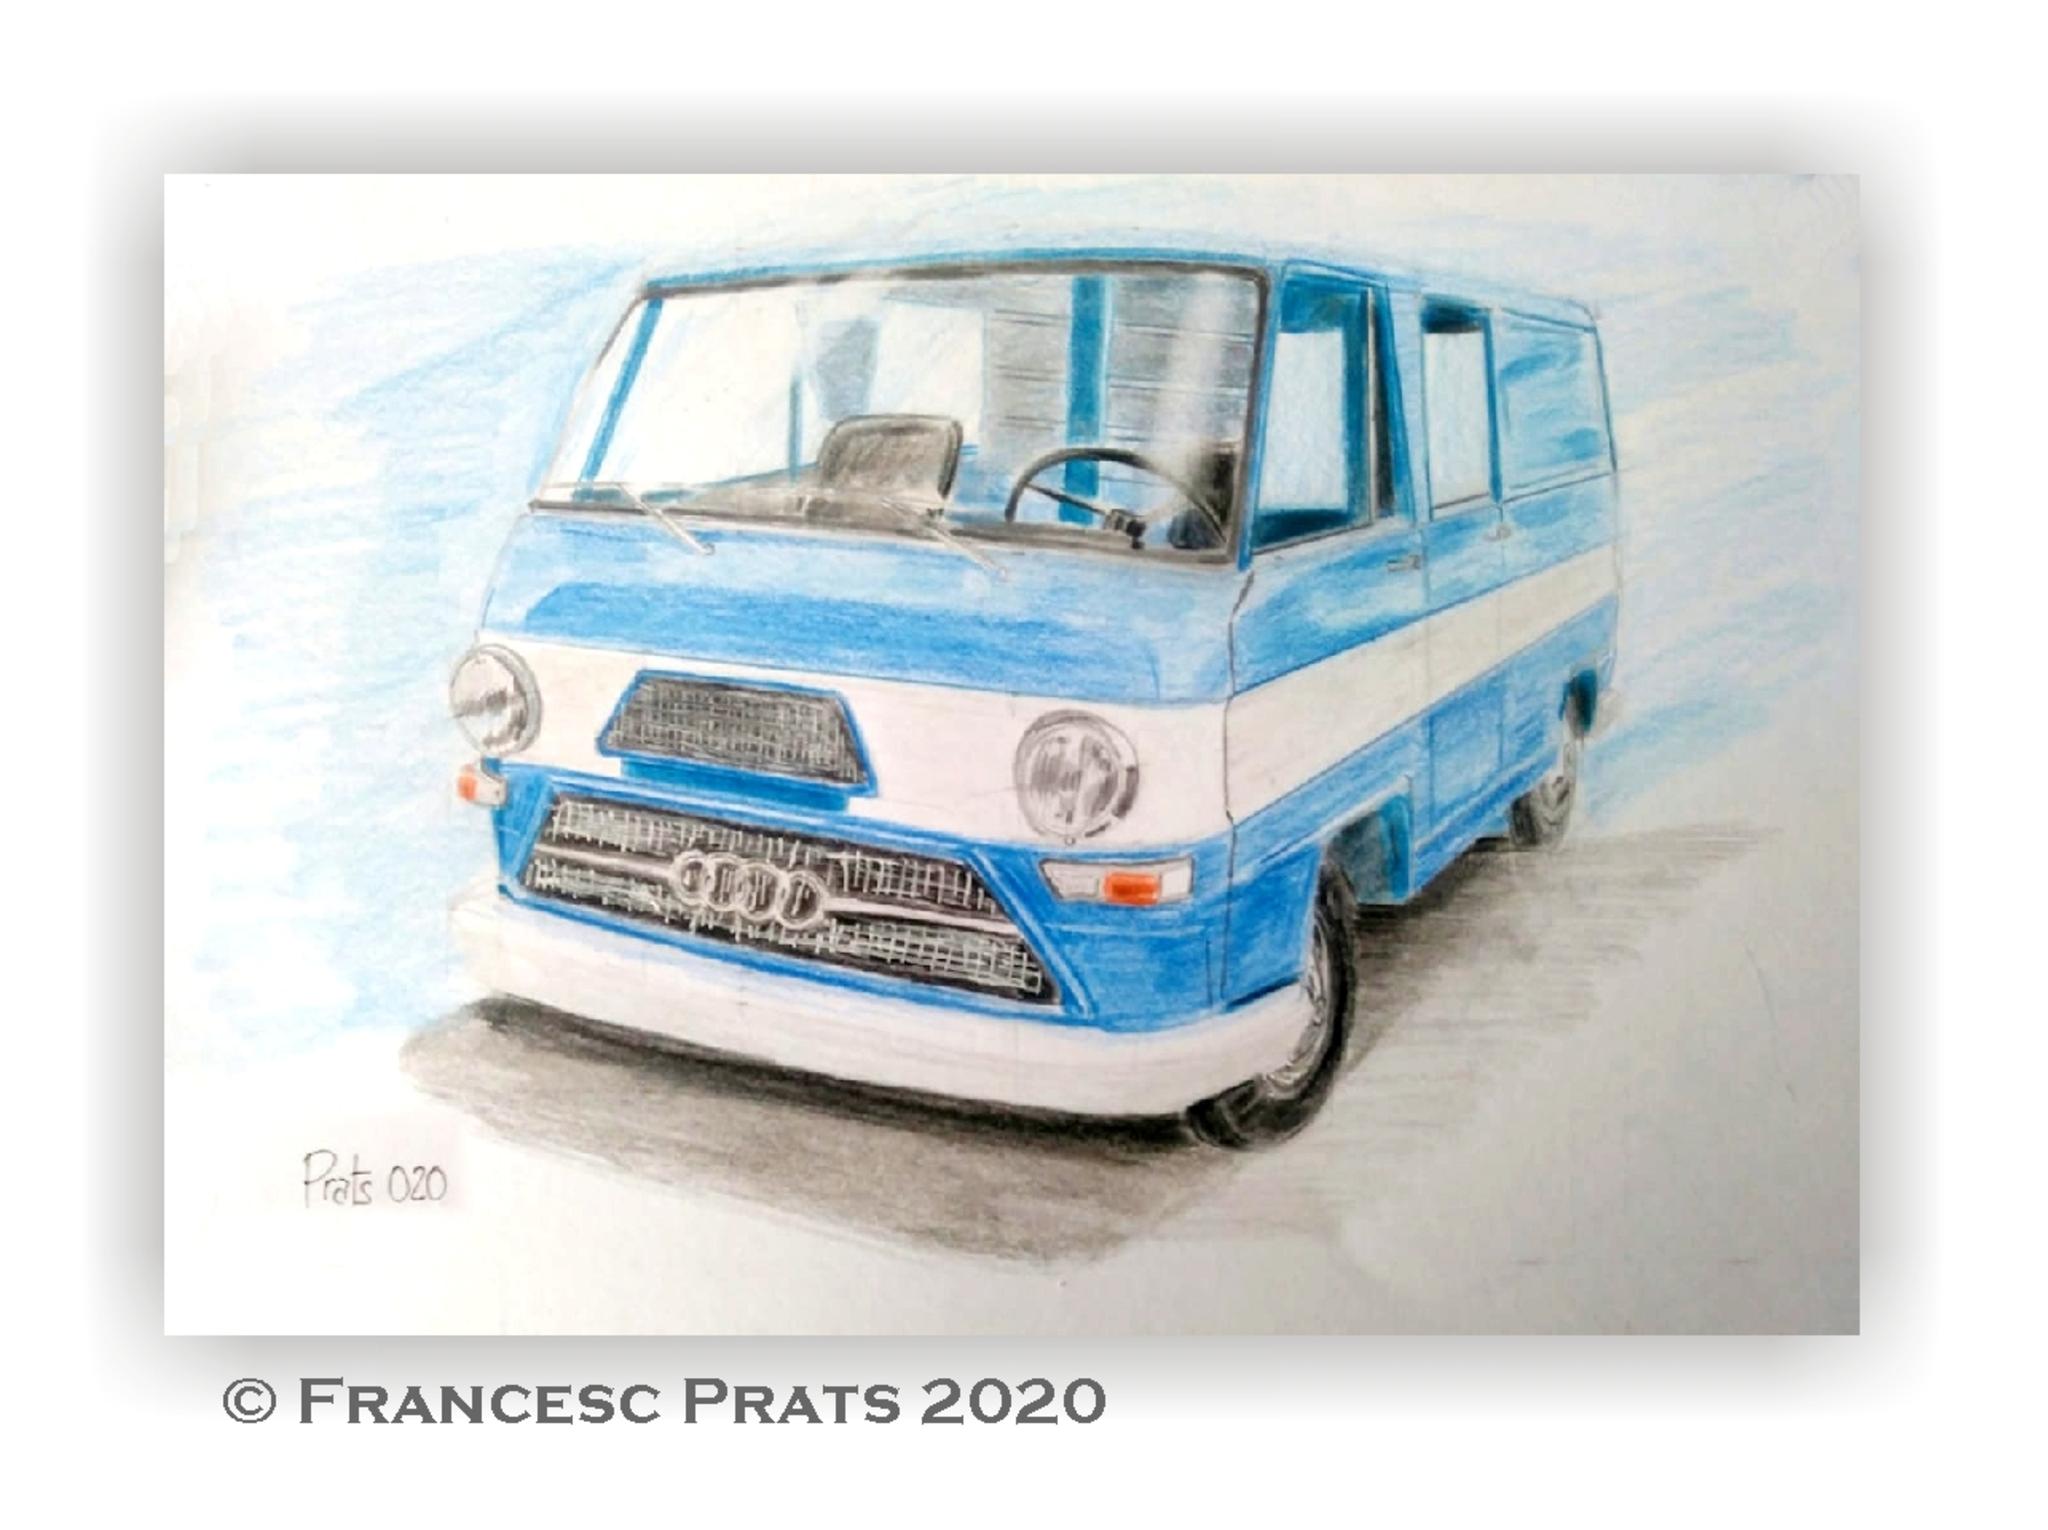  Francesc Prats 2020